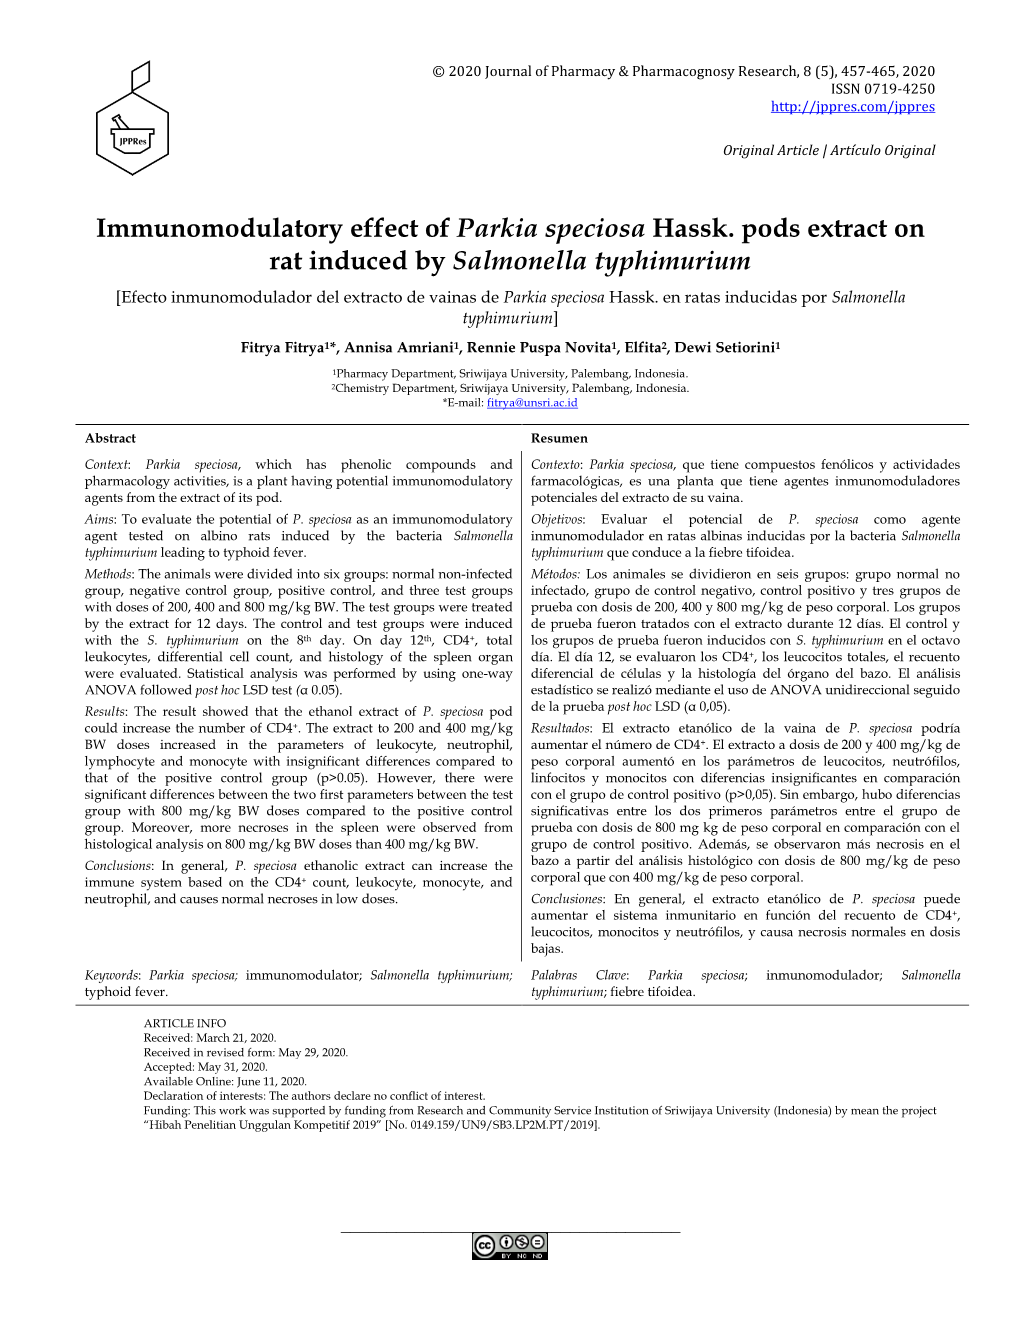 Immunomodulatory Effect of Parkia Speciosa Hassk. Pods Extract on Rat